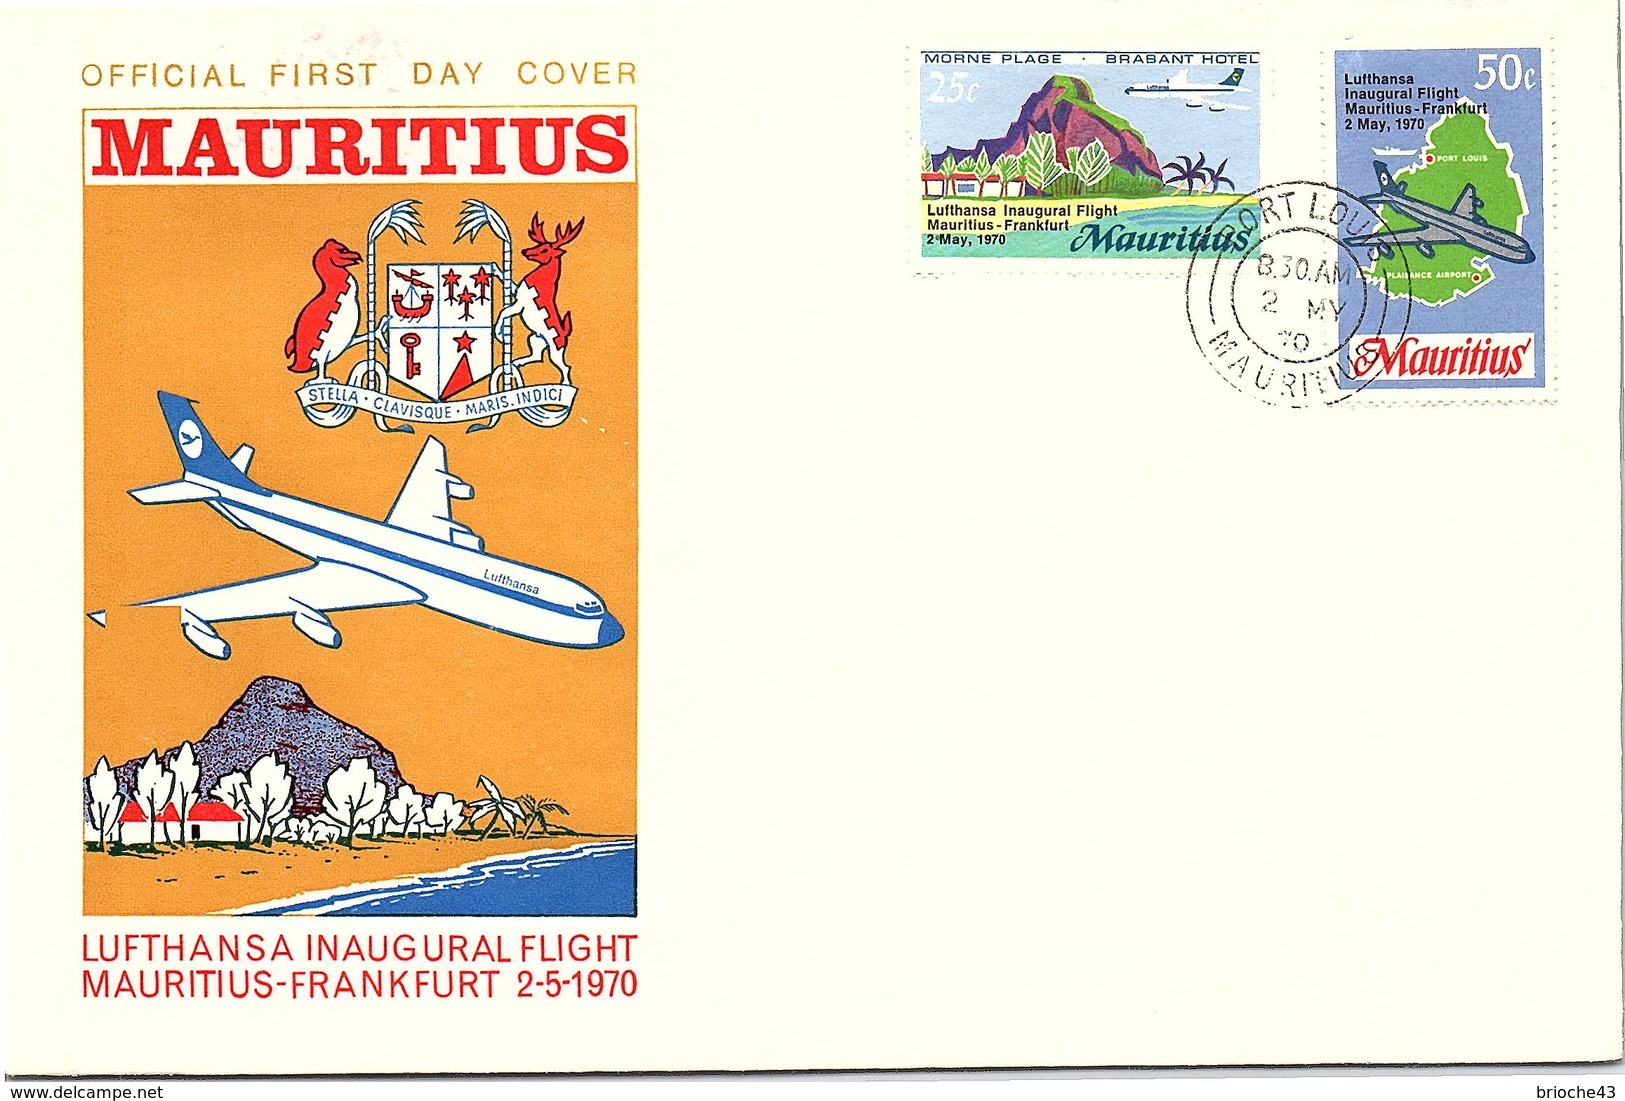 MAURITIUS  - FDC LUFTHANSA INAUGURAL FLIGHT MAURITIUS-FRANKFURT 2.5.1970 - PORT LOUIS 2.5.70  / 2 - Maurice (1968-...)